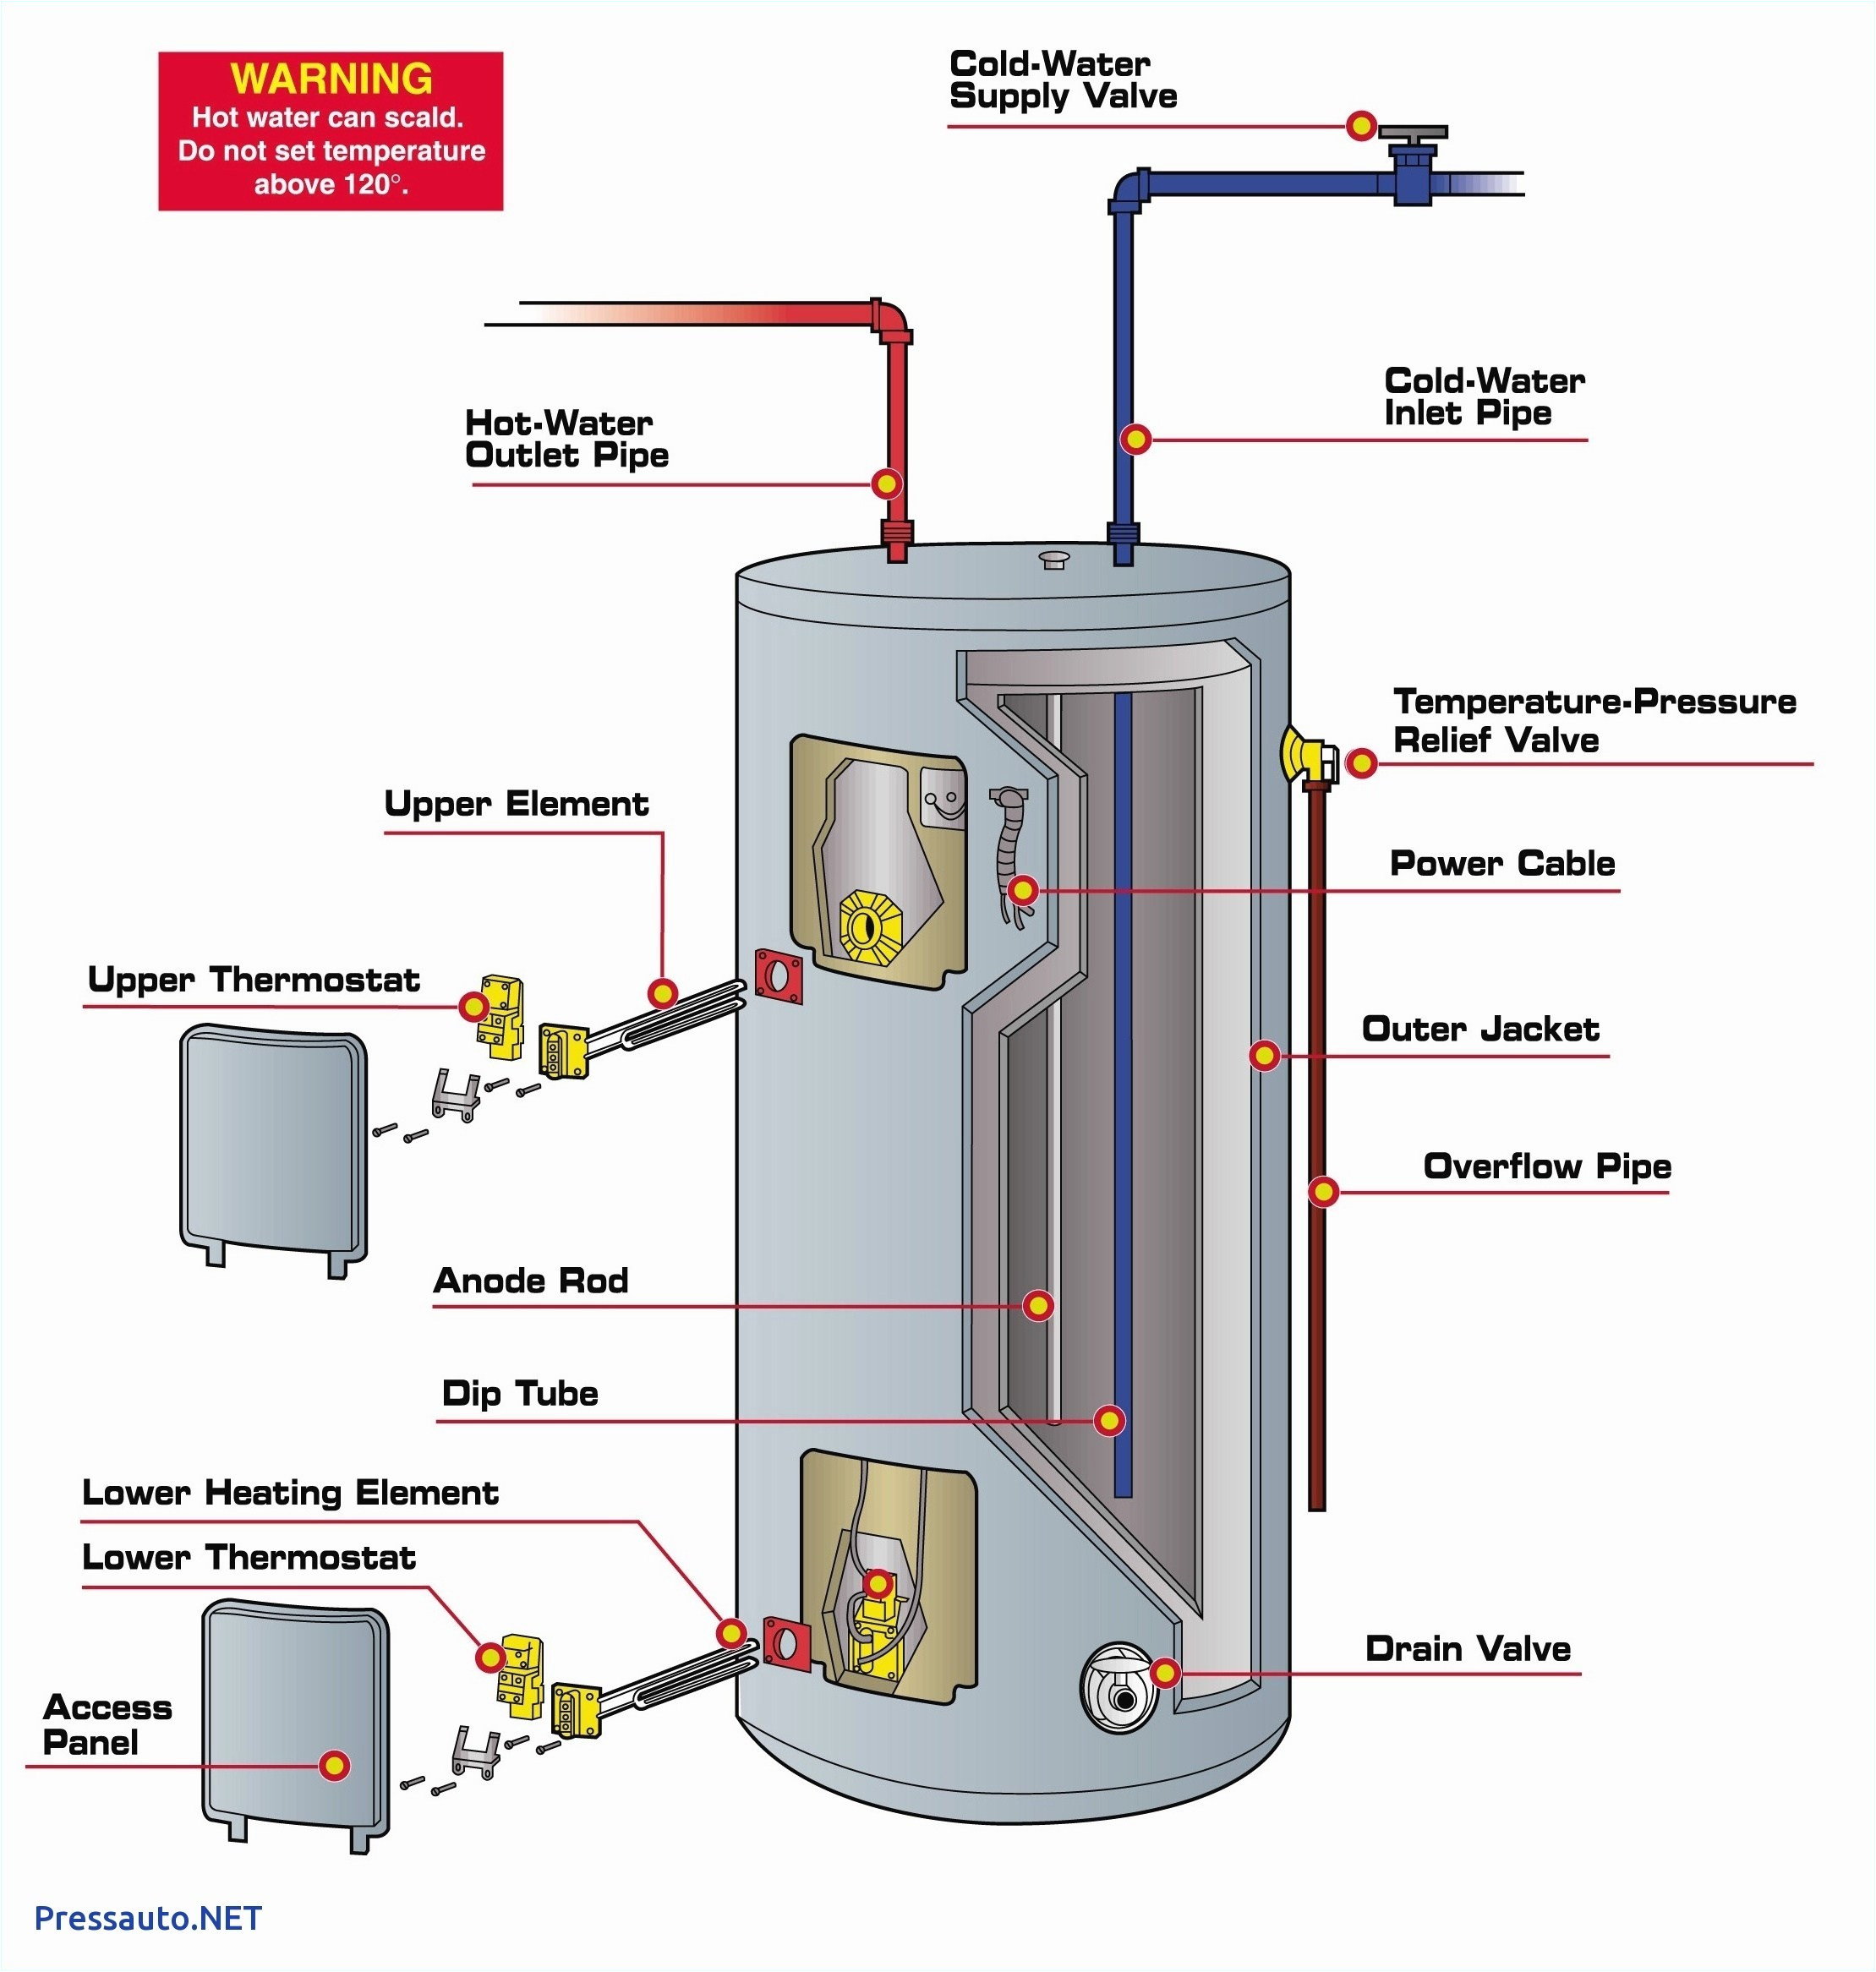 Gas Hot Water Heater Wiring Diagram Hot Schematic Wiring Diagram Data Schematic Diagram